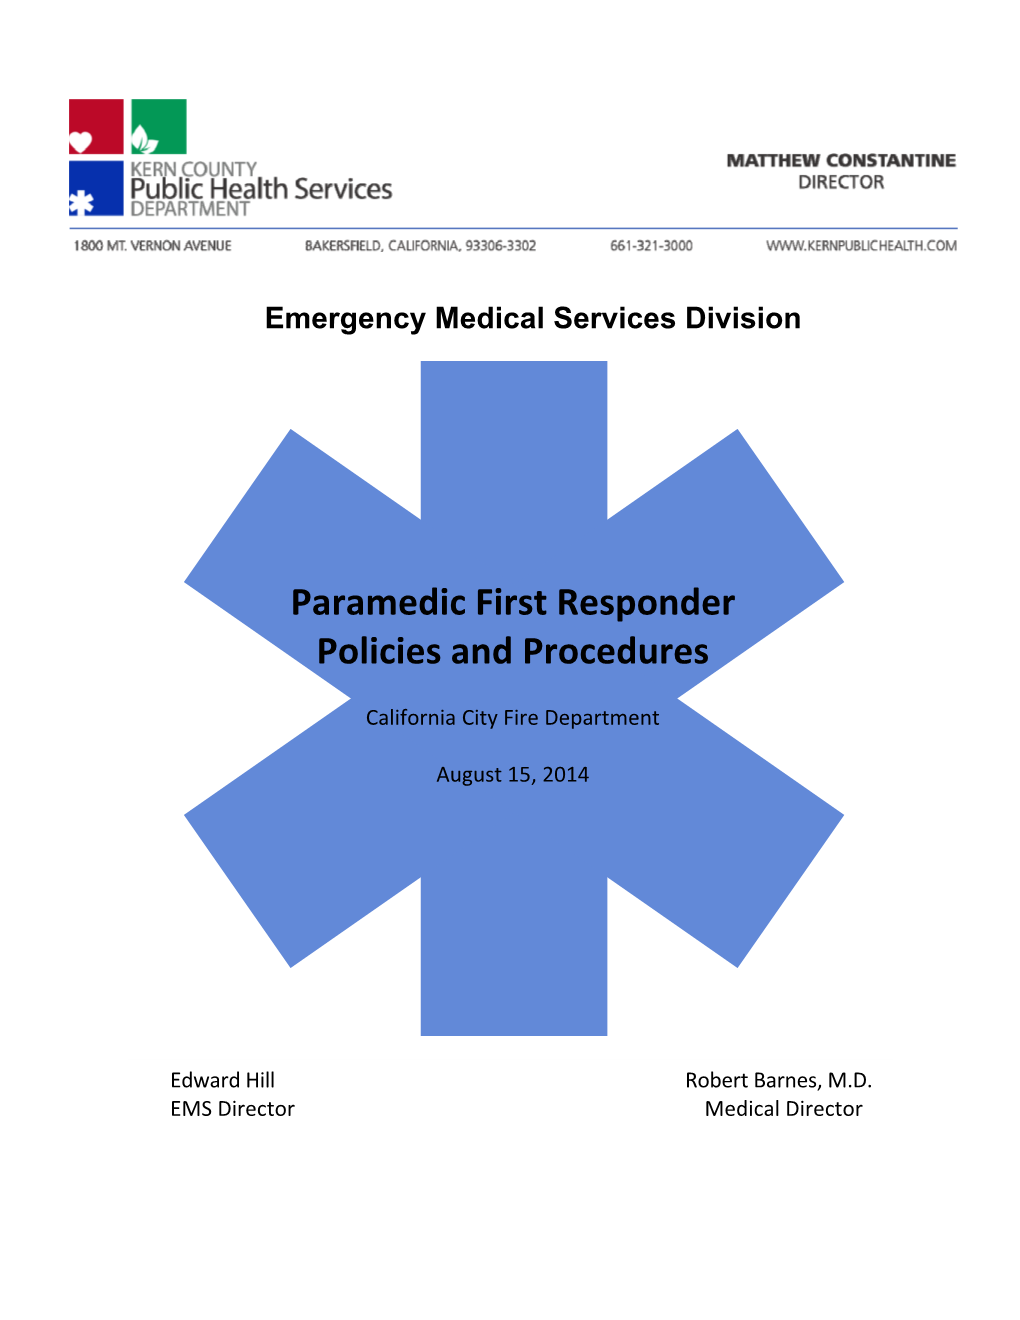 Paramedic First Responder Policies and Procedures